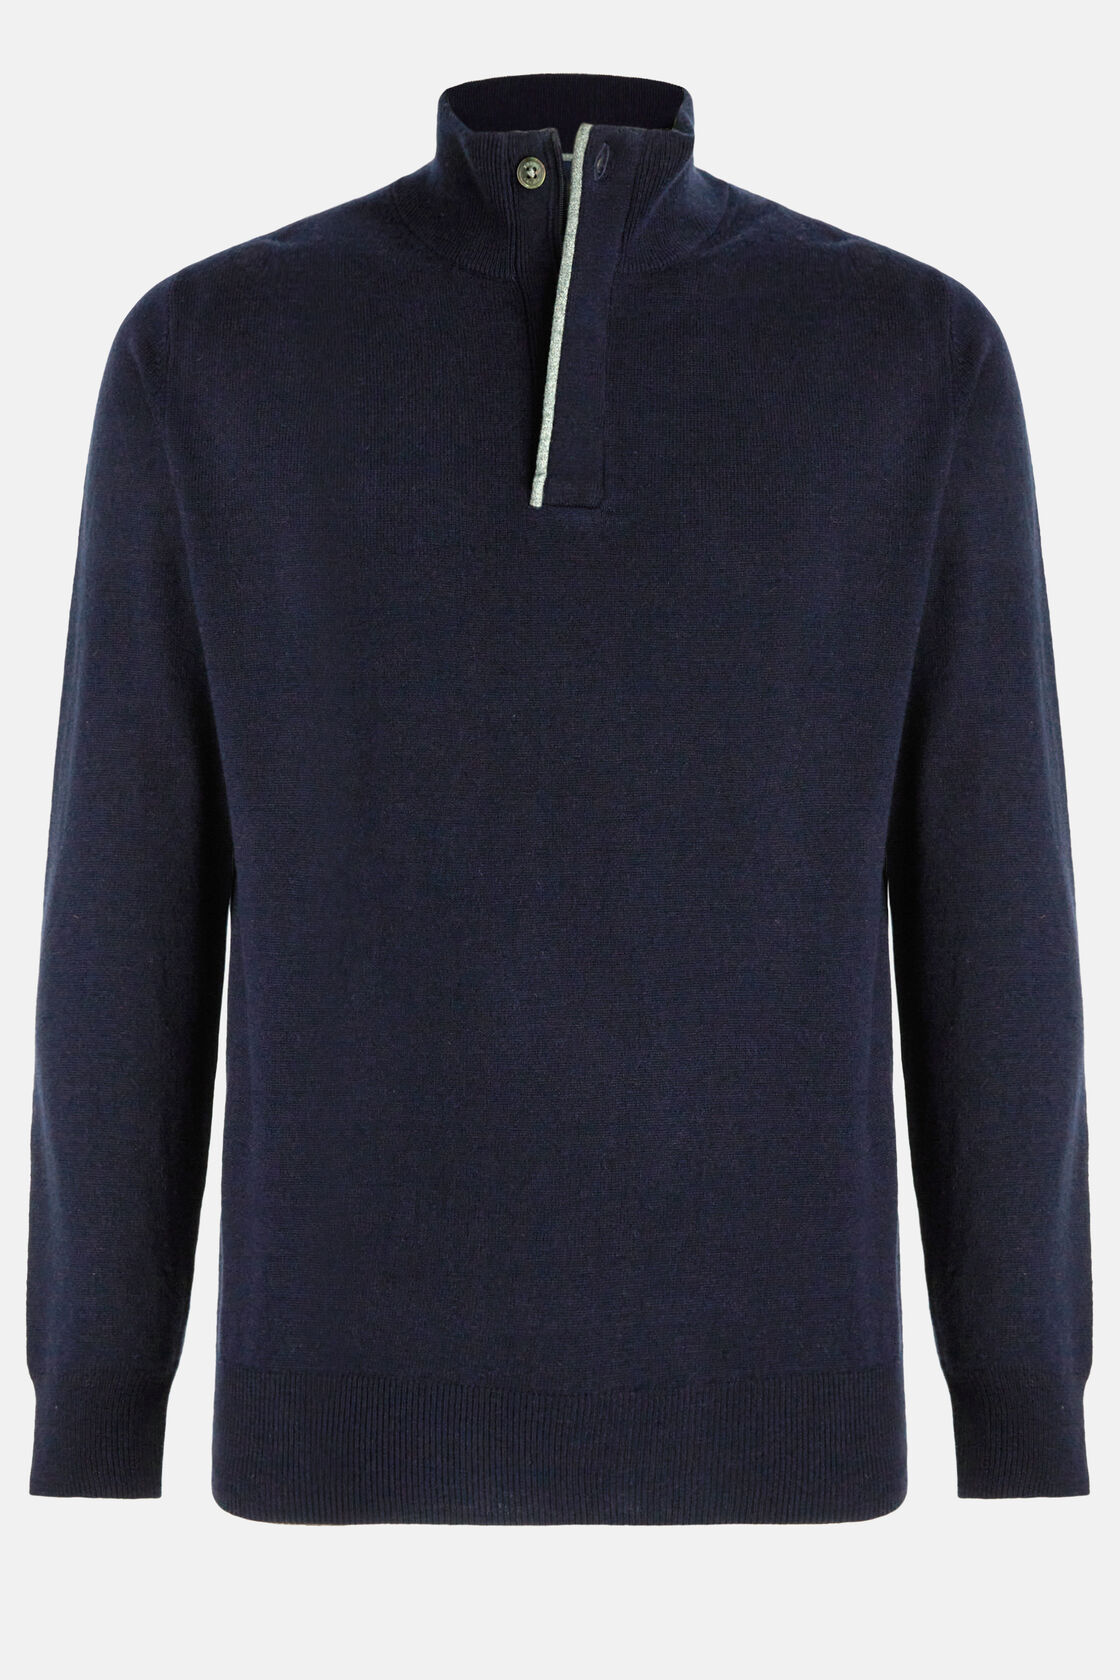 Navy Wool/Cashmere Half Zip Jumper, Navy blue, hi-res